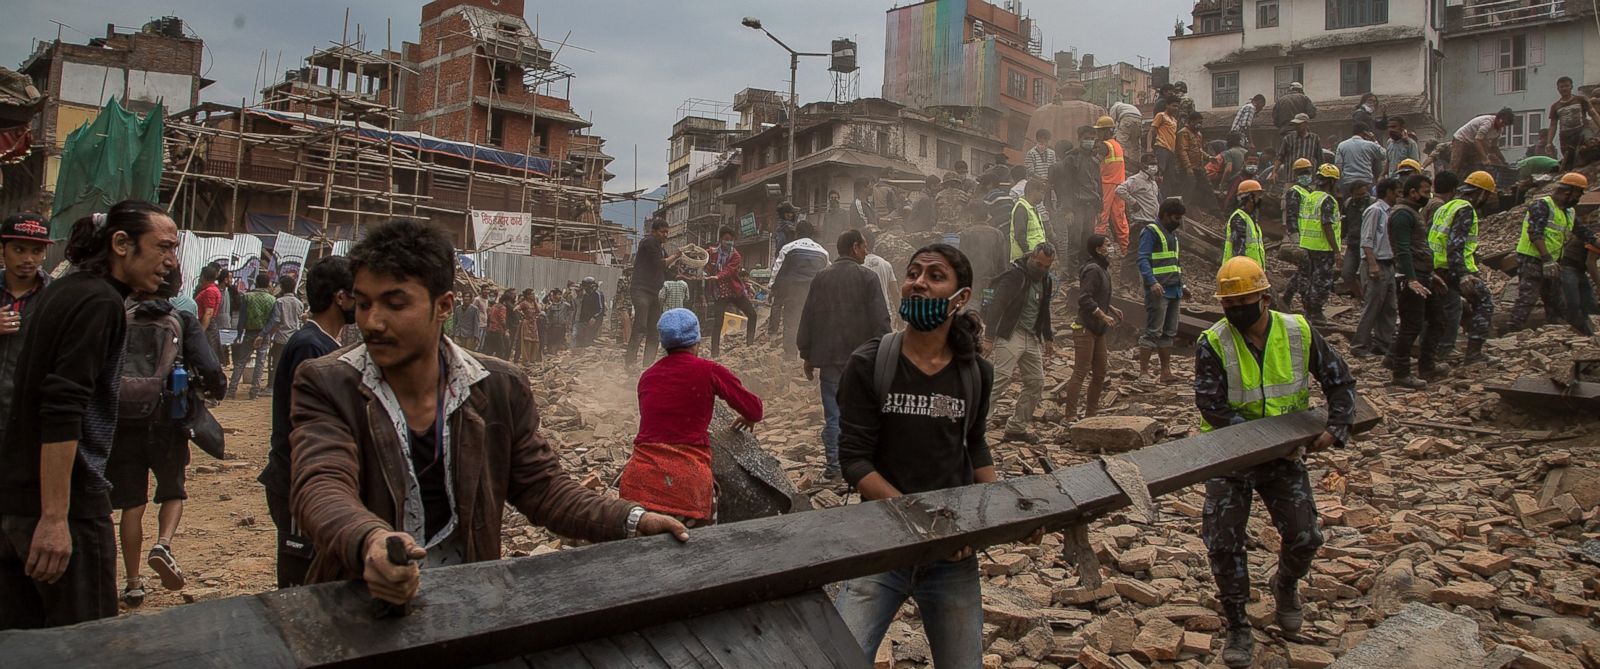 Americans In Nepal Describe Massive Earthquake And